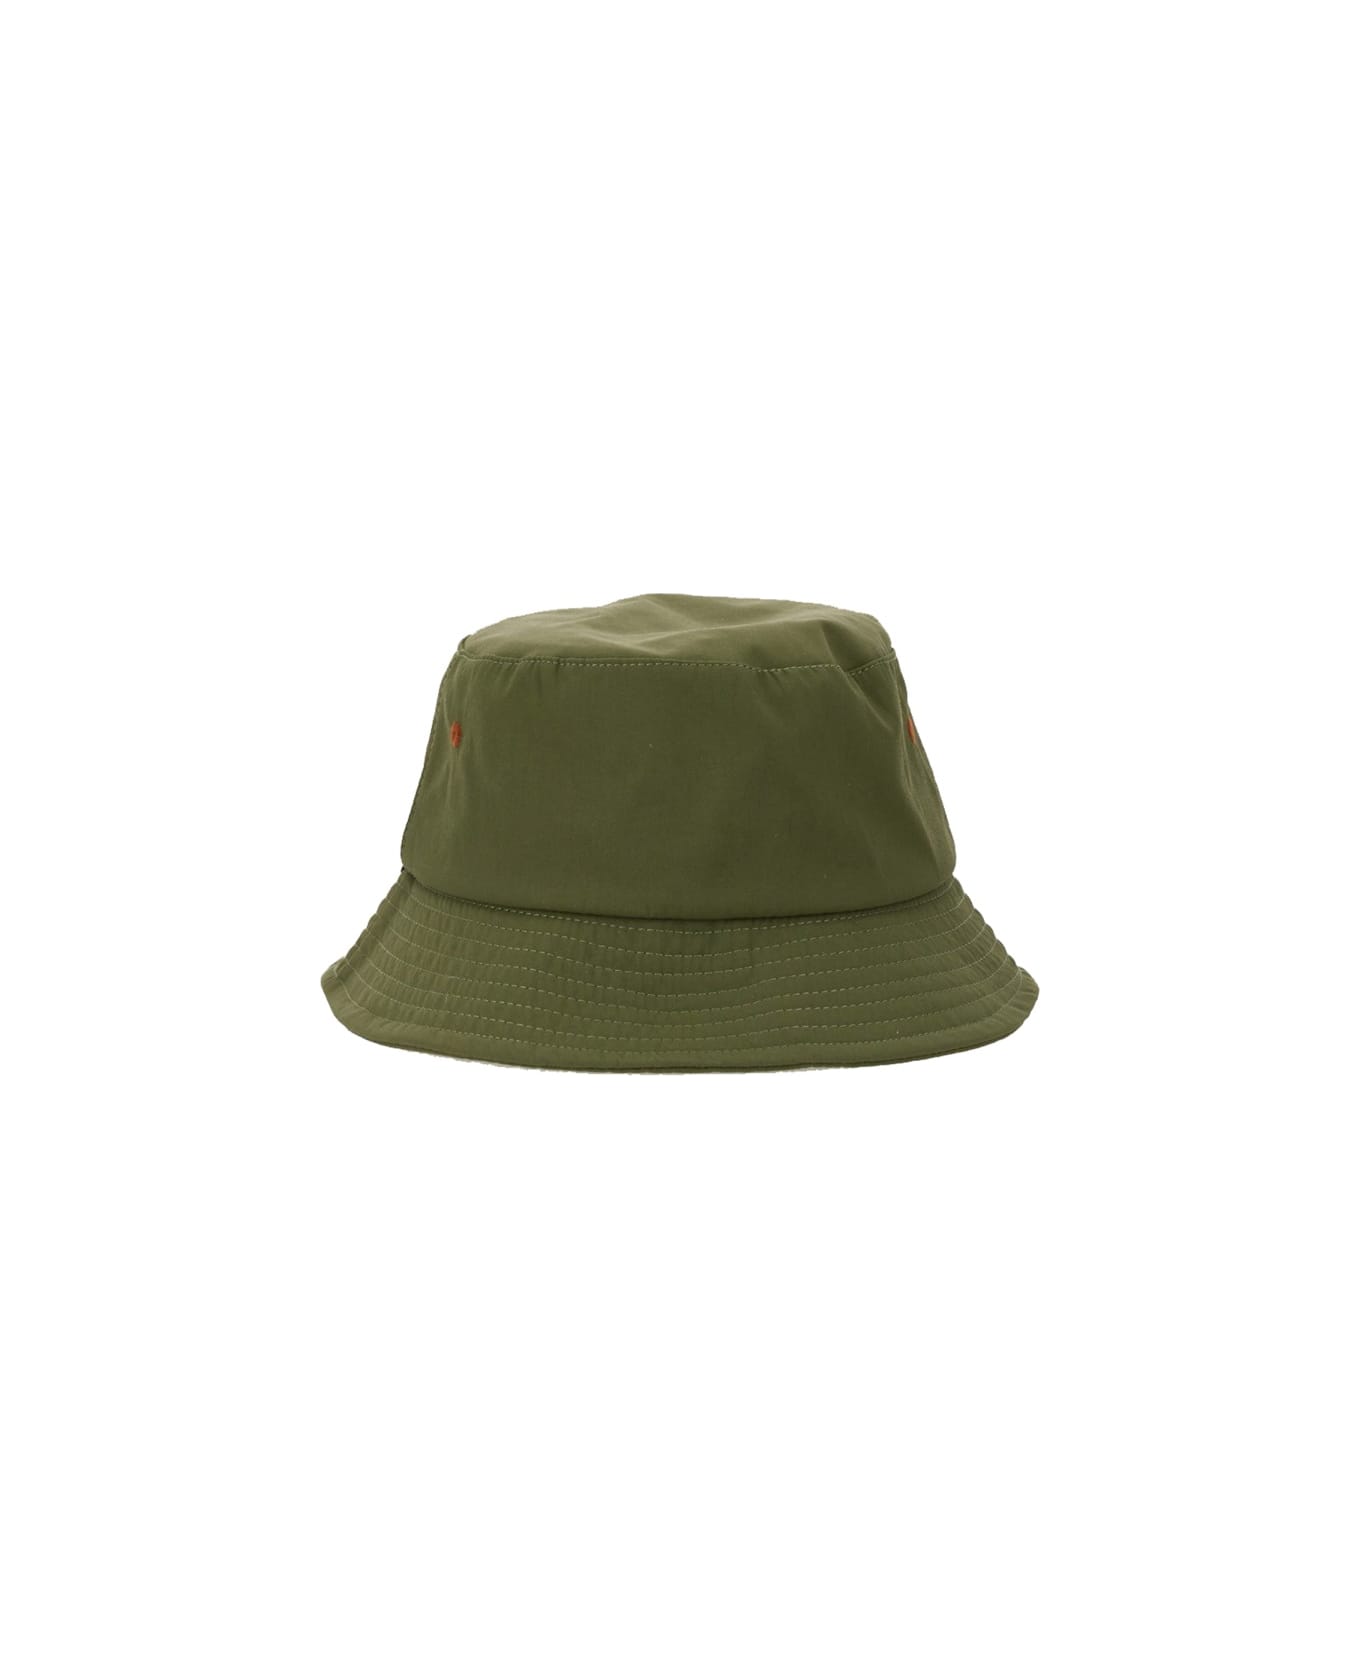 PS by Paul Smith Zebra Bucket Hat - MILITARY GREEN 帽子